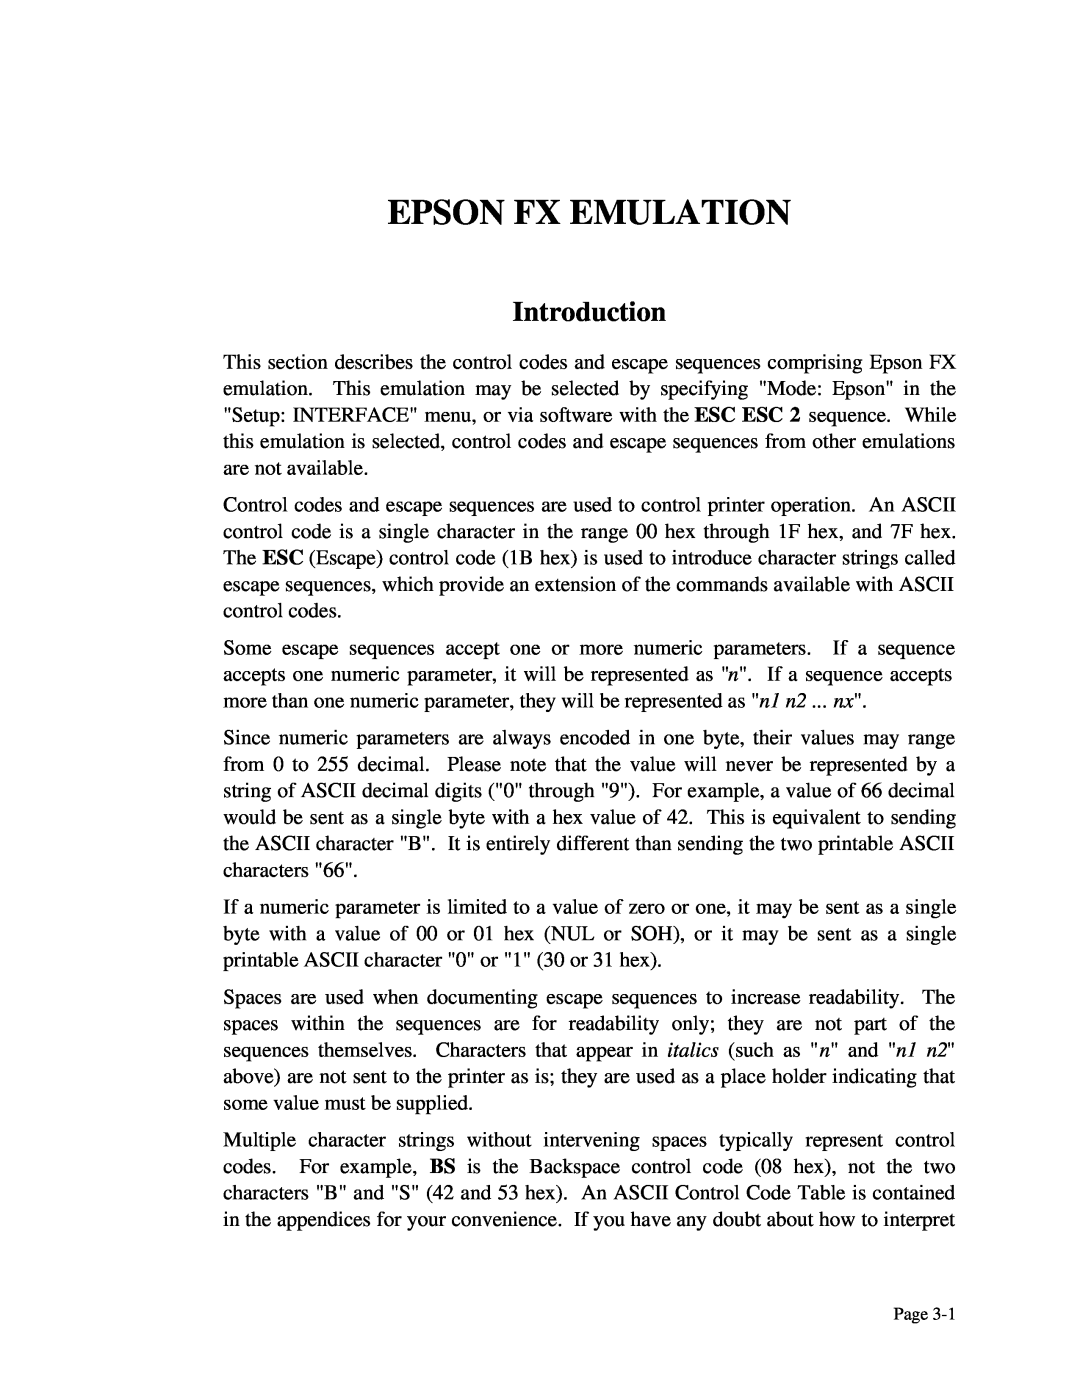 Printek 4500, 4503, 4300 manual Epson Fx Emulation, Introduction 